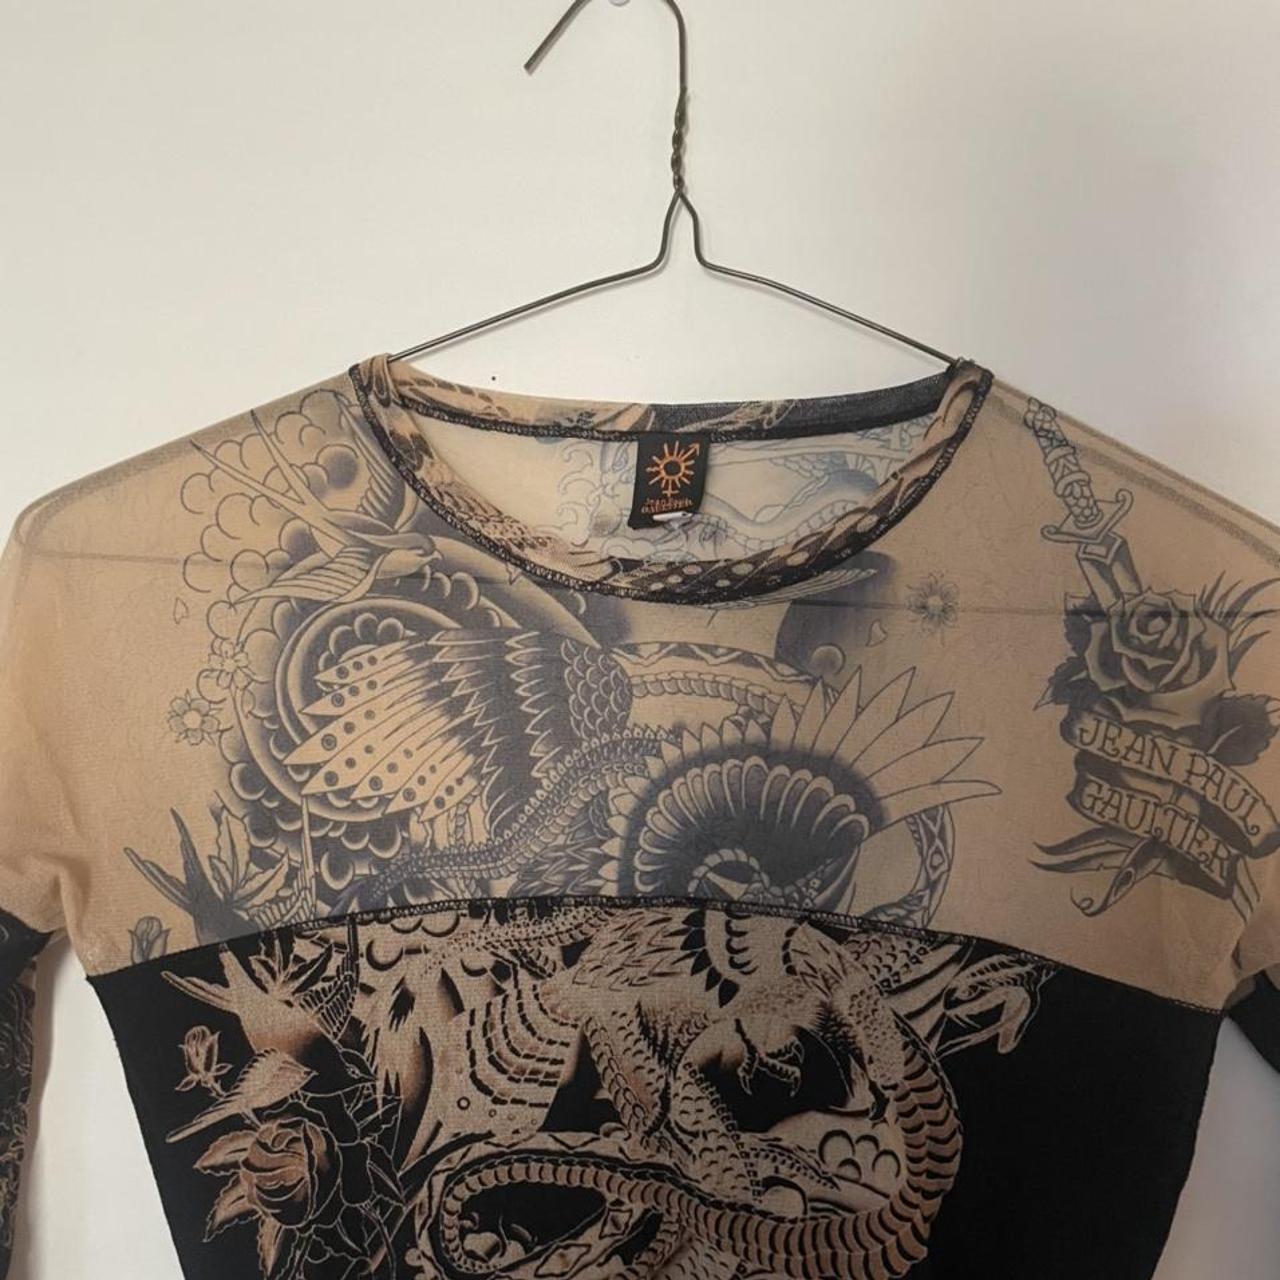 Jean-Paul Gaultier Women's Black and Brown Shirt